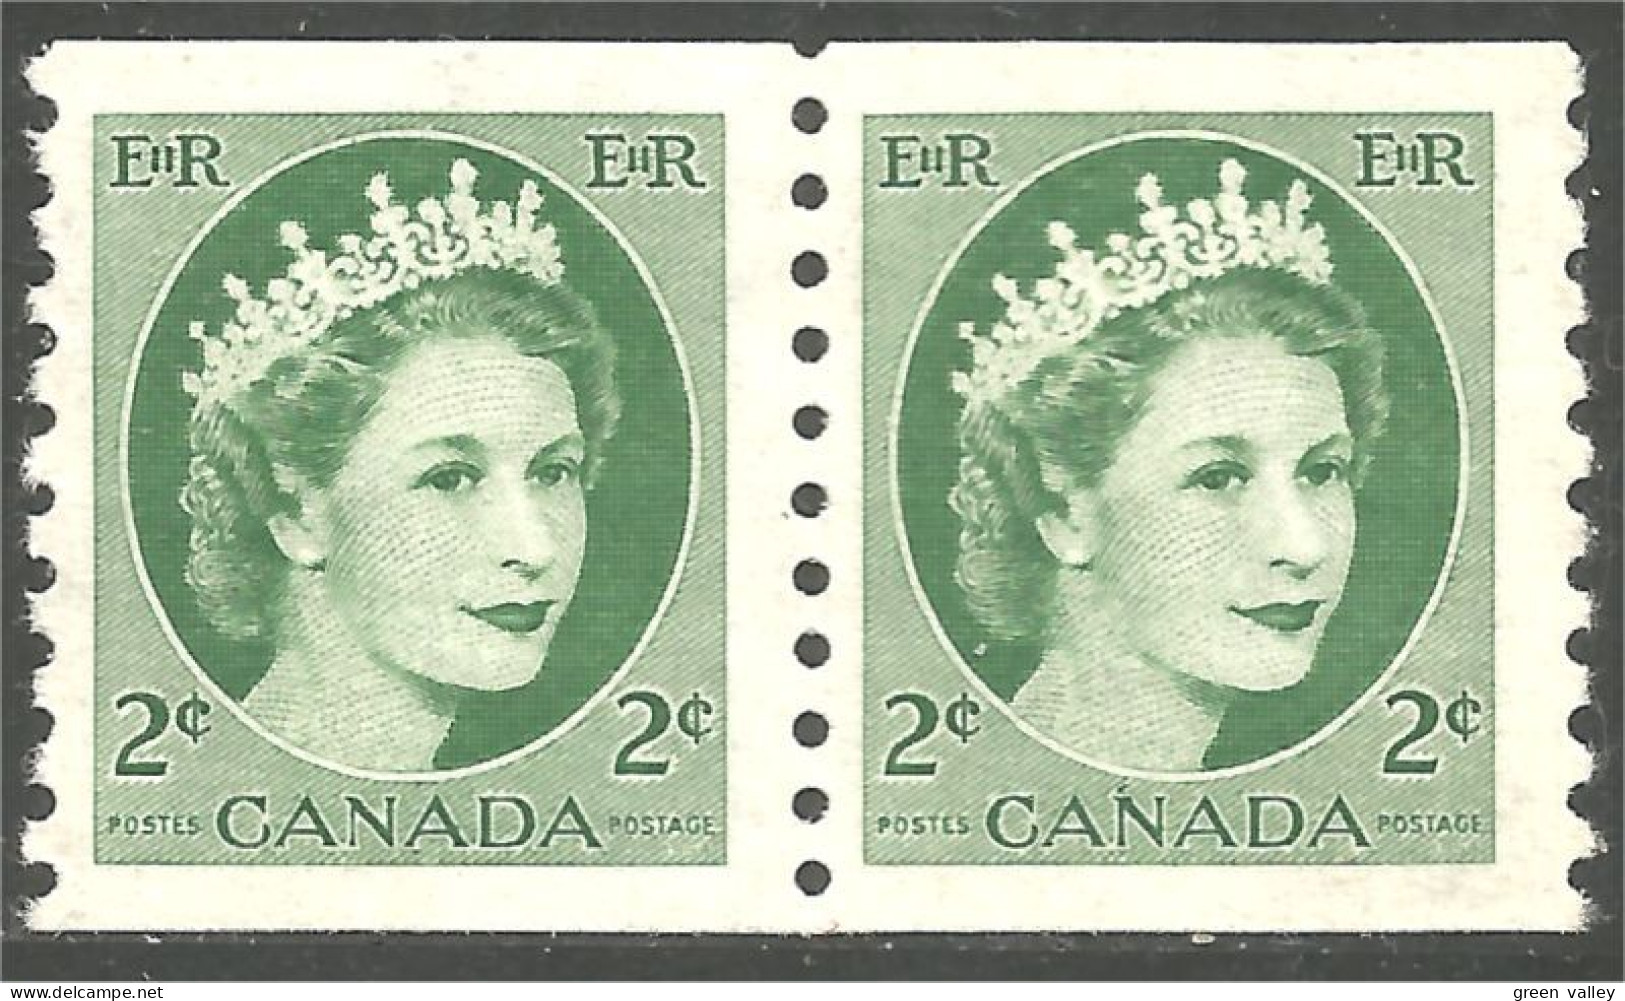 951 Canada 1954 #345 Queen Elizabeth Wilding Portrait 2c Vert Green Roulette Coil PAIR **/* (460) - Nuovi